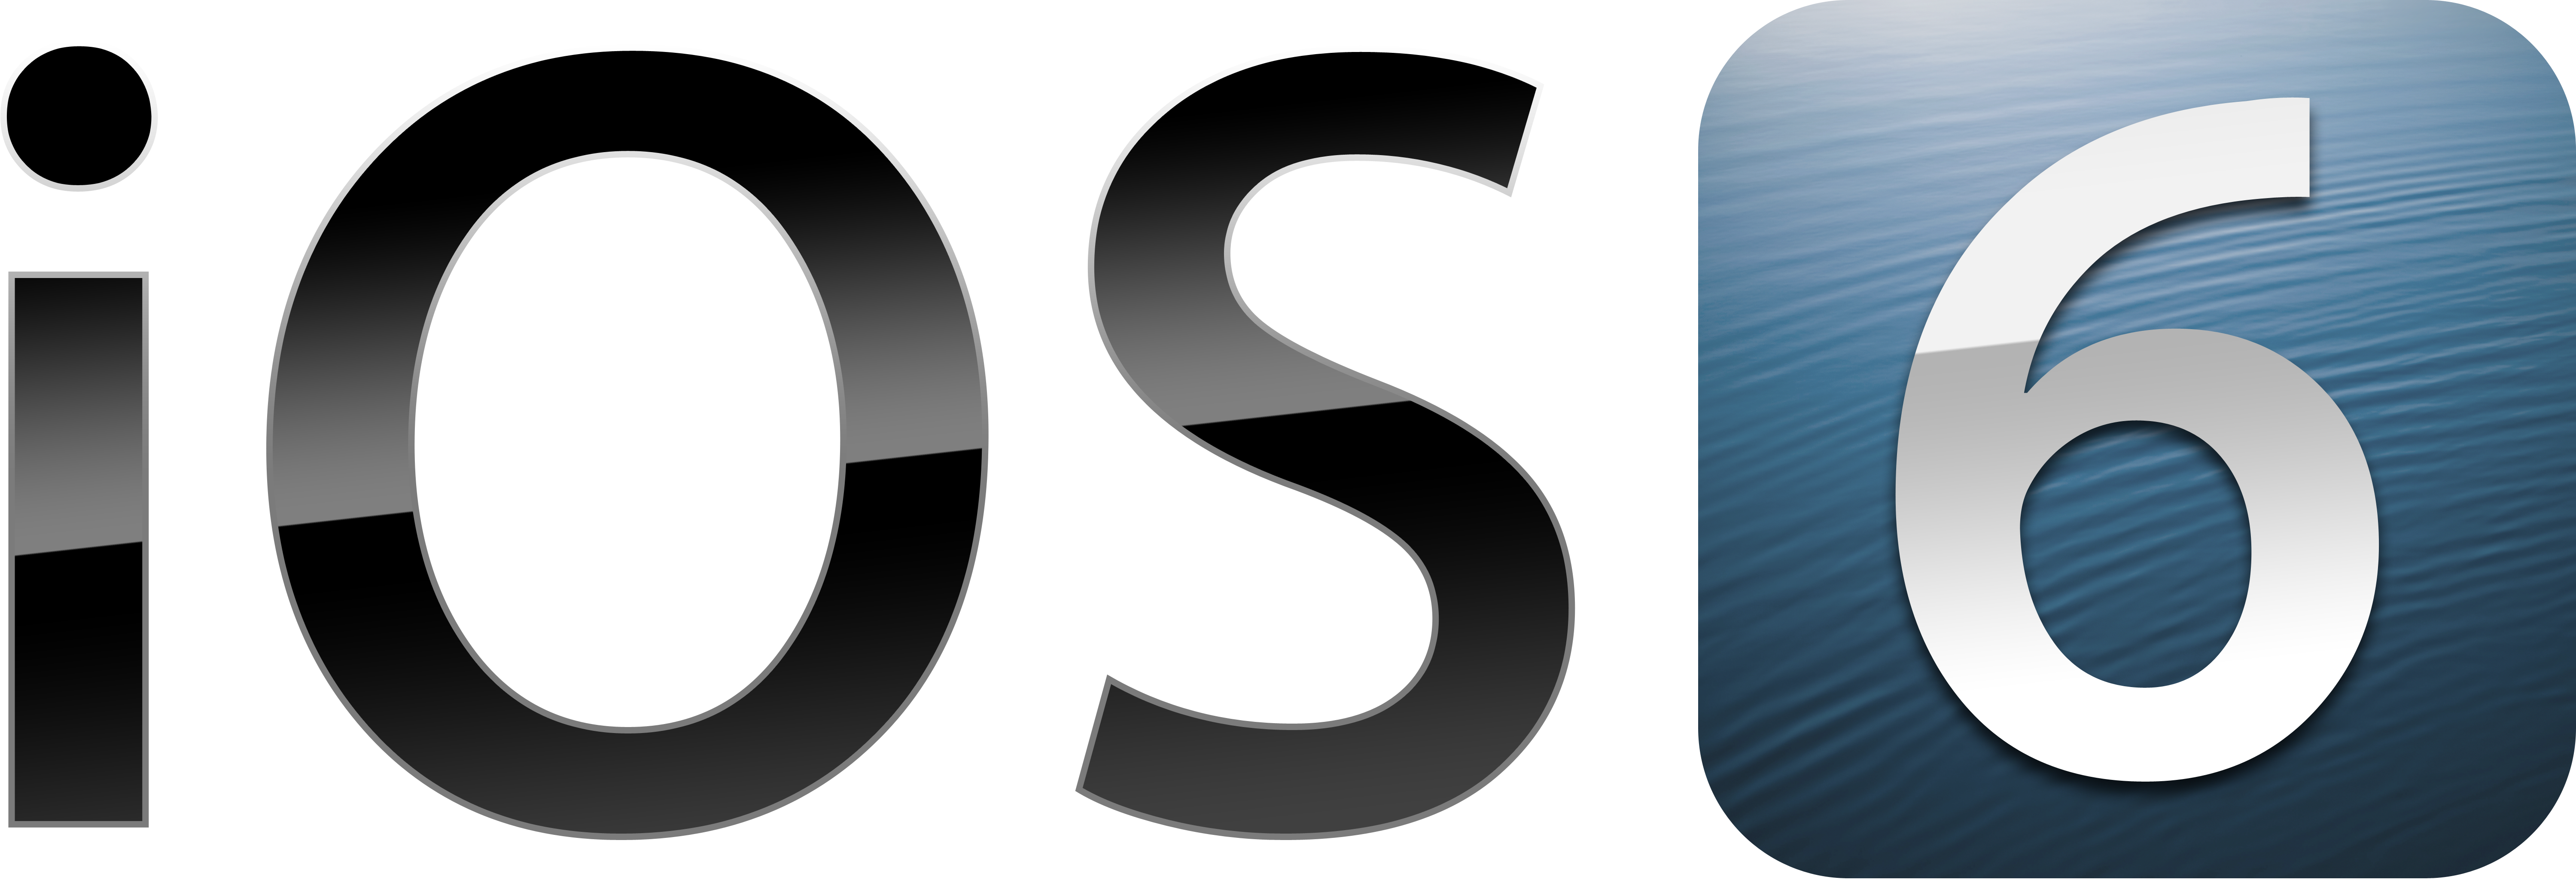 iOS 6 Logo PSD  PNG by theIntensePlayer on DeviantArt